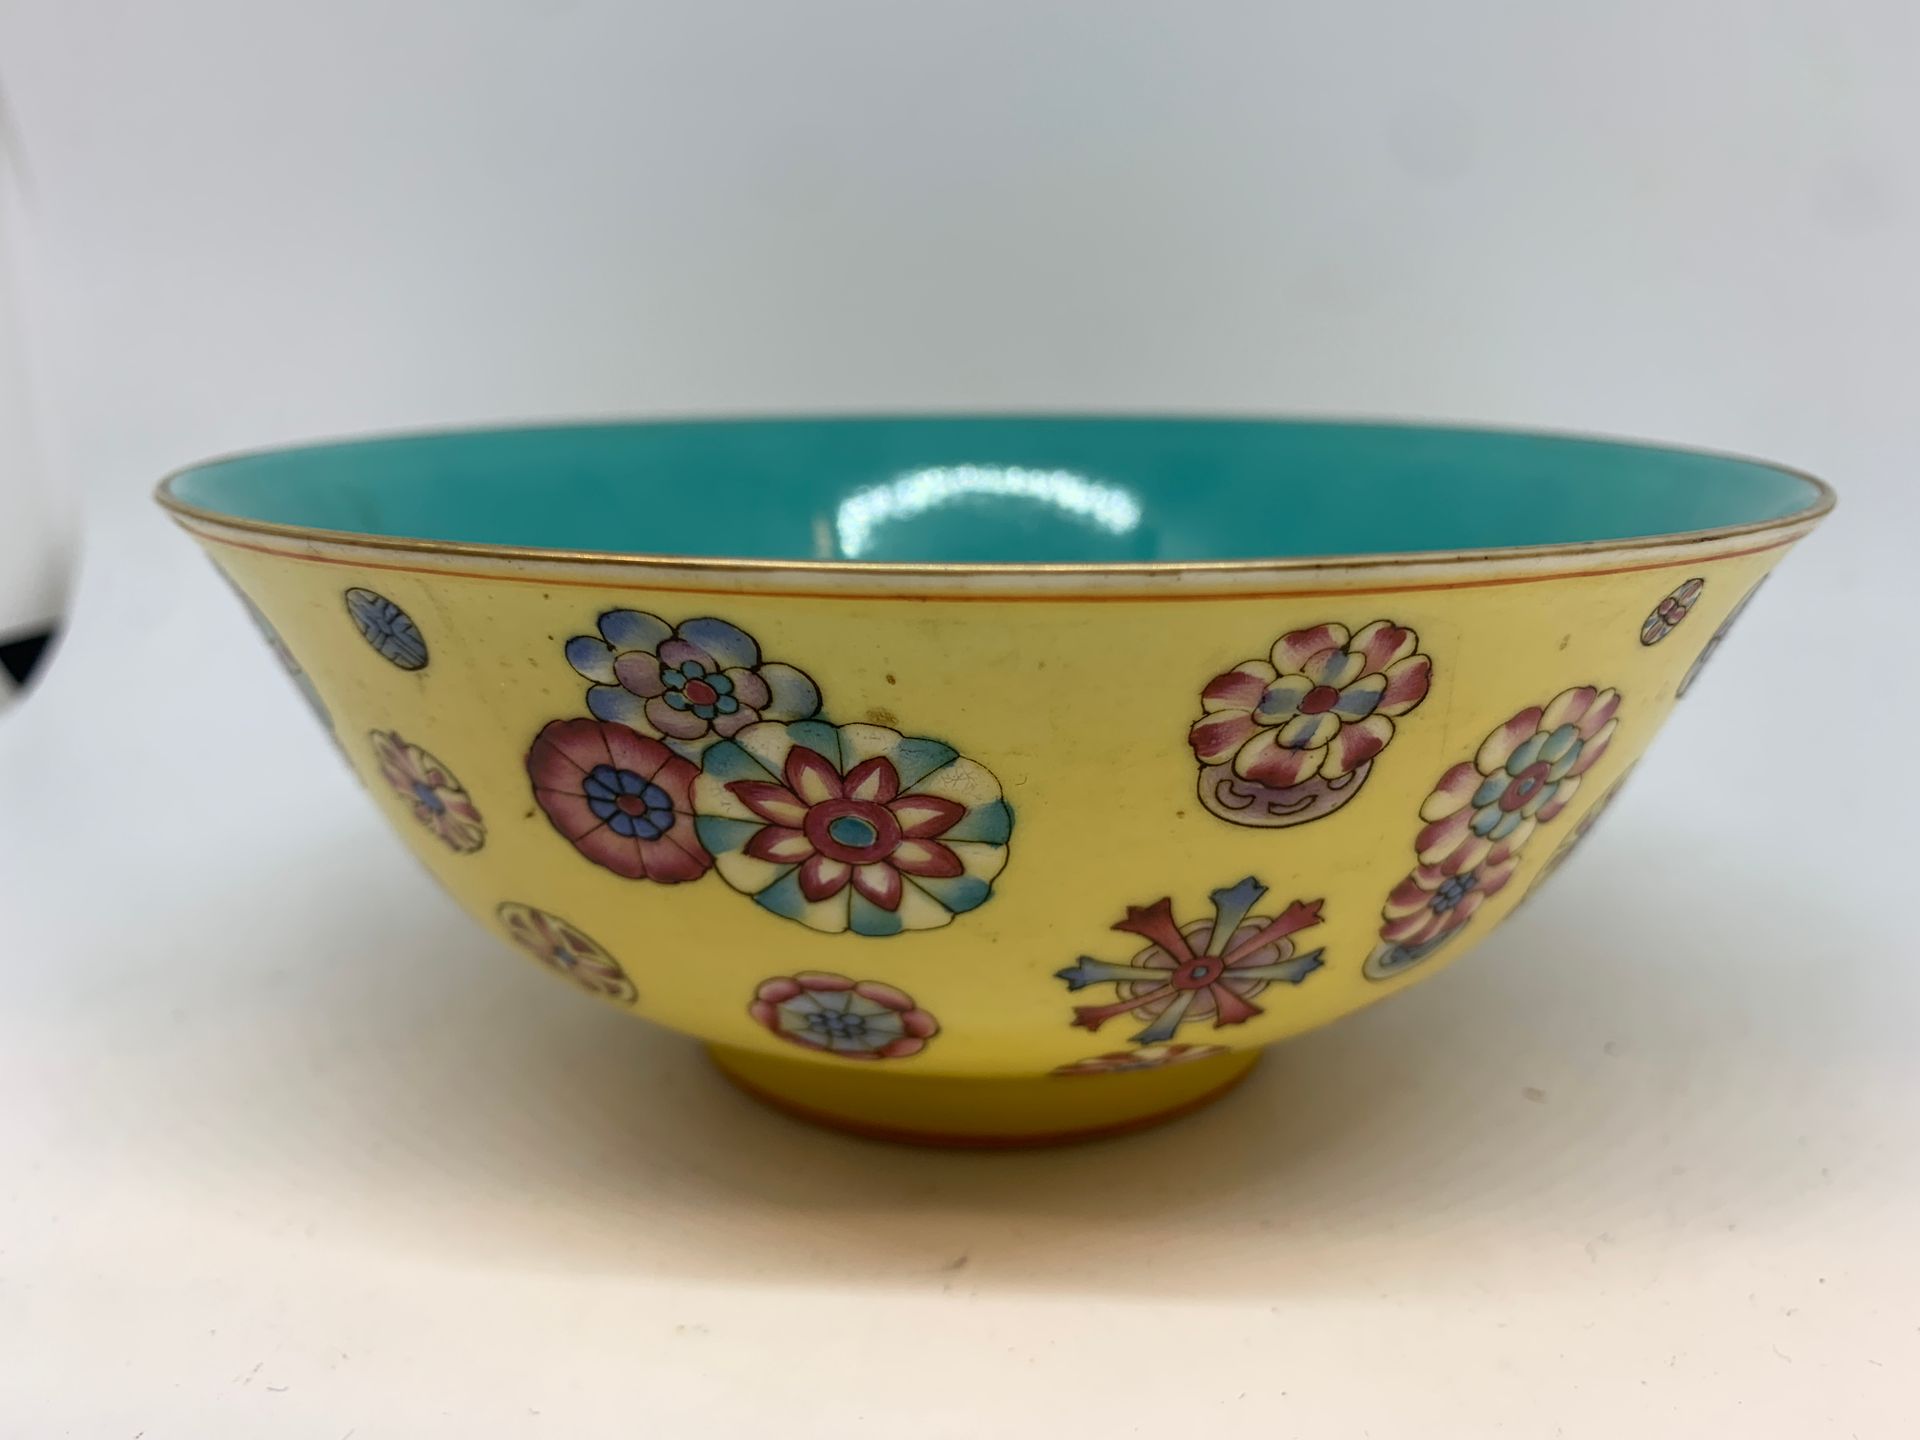 Null 中国
瓷碗，黄底多色花纹装饰。背面标有 "QIANLONG"。
尺寸：15.5厘米